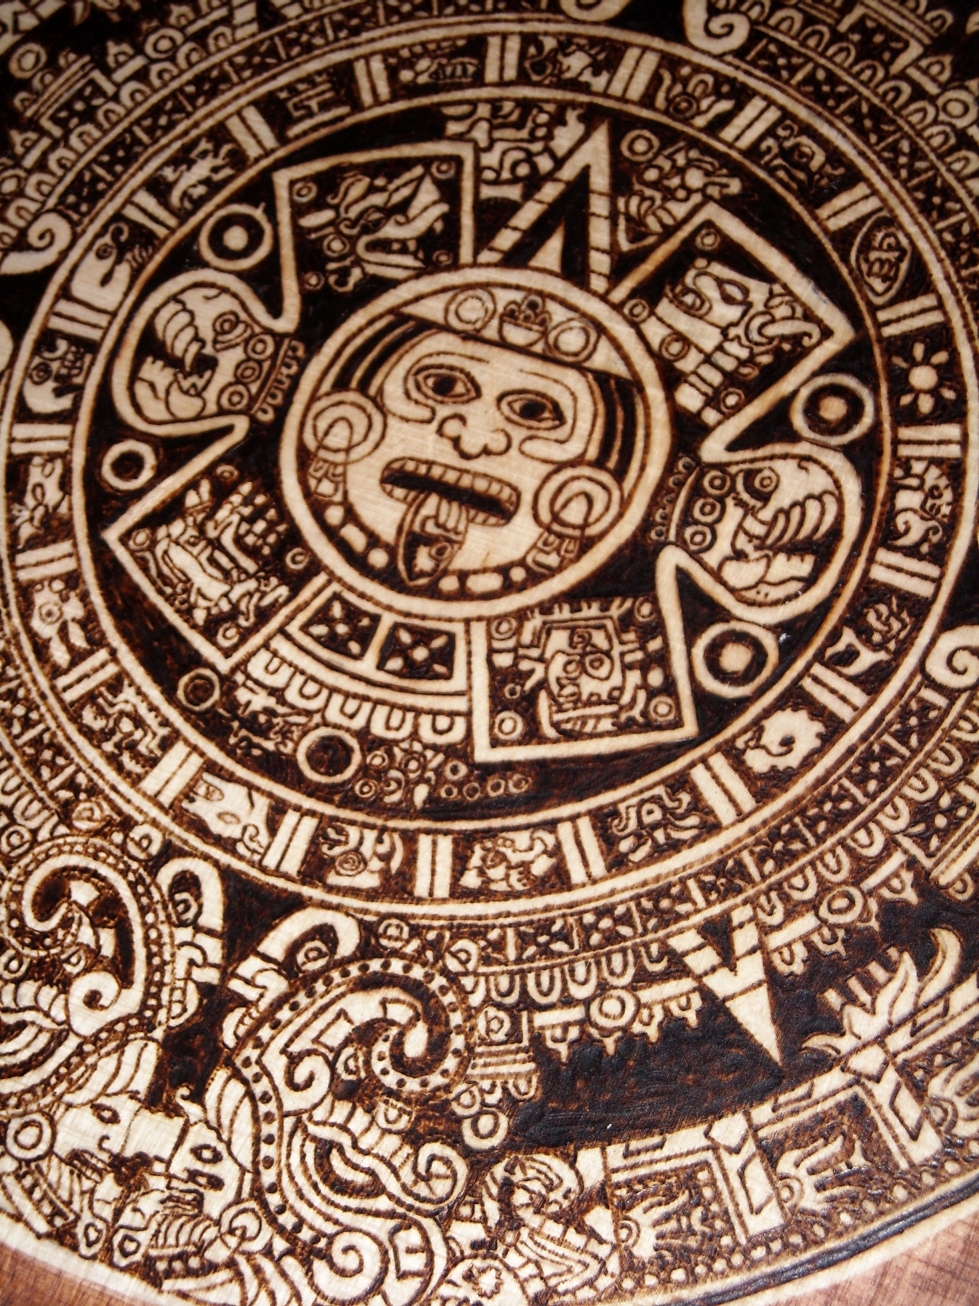 Burned in wood: Mayan calendar 2 by kaneda8585 on DeviantArt